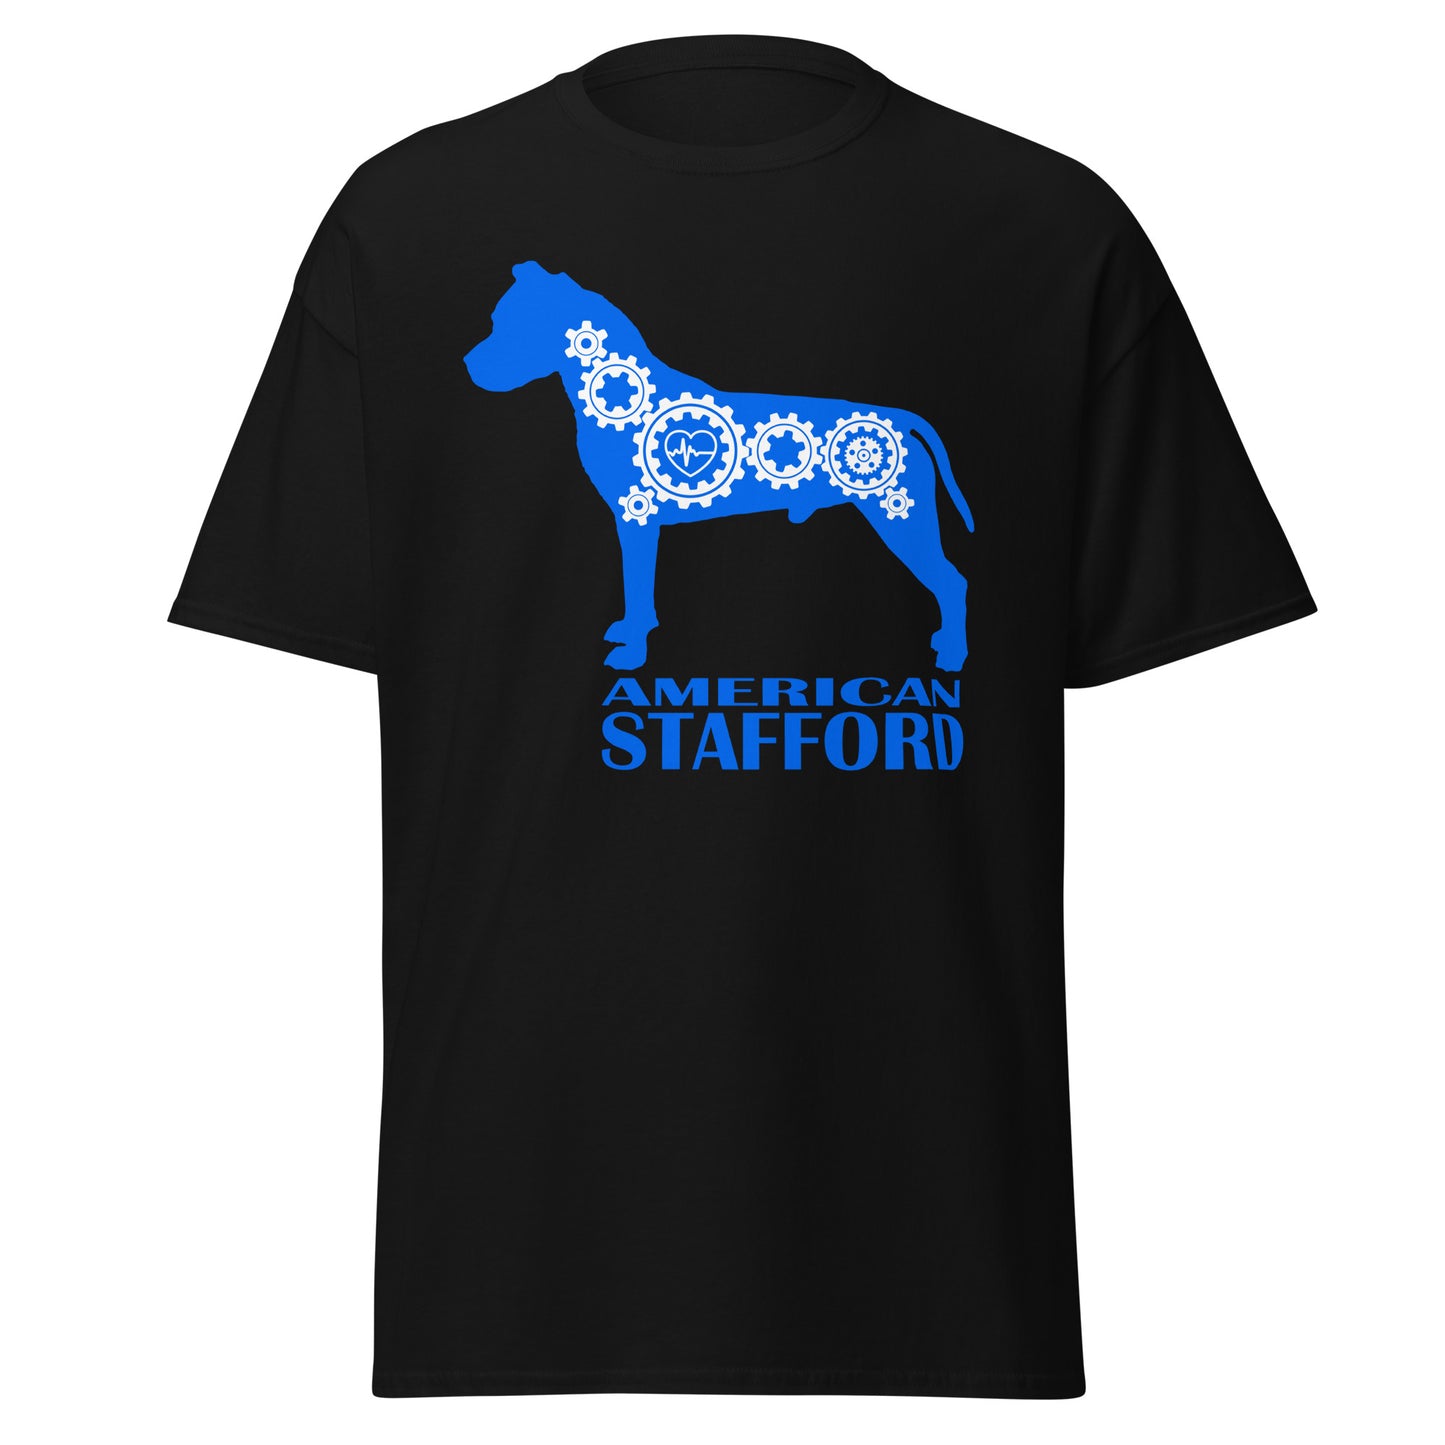 American Stafford Bionic men’s black t-shirt by Dog Artistry.